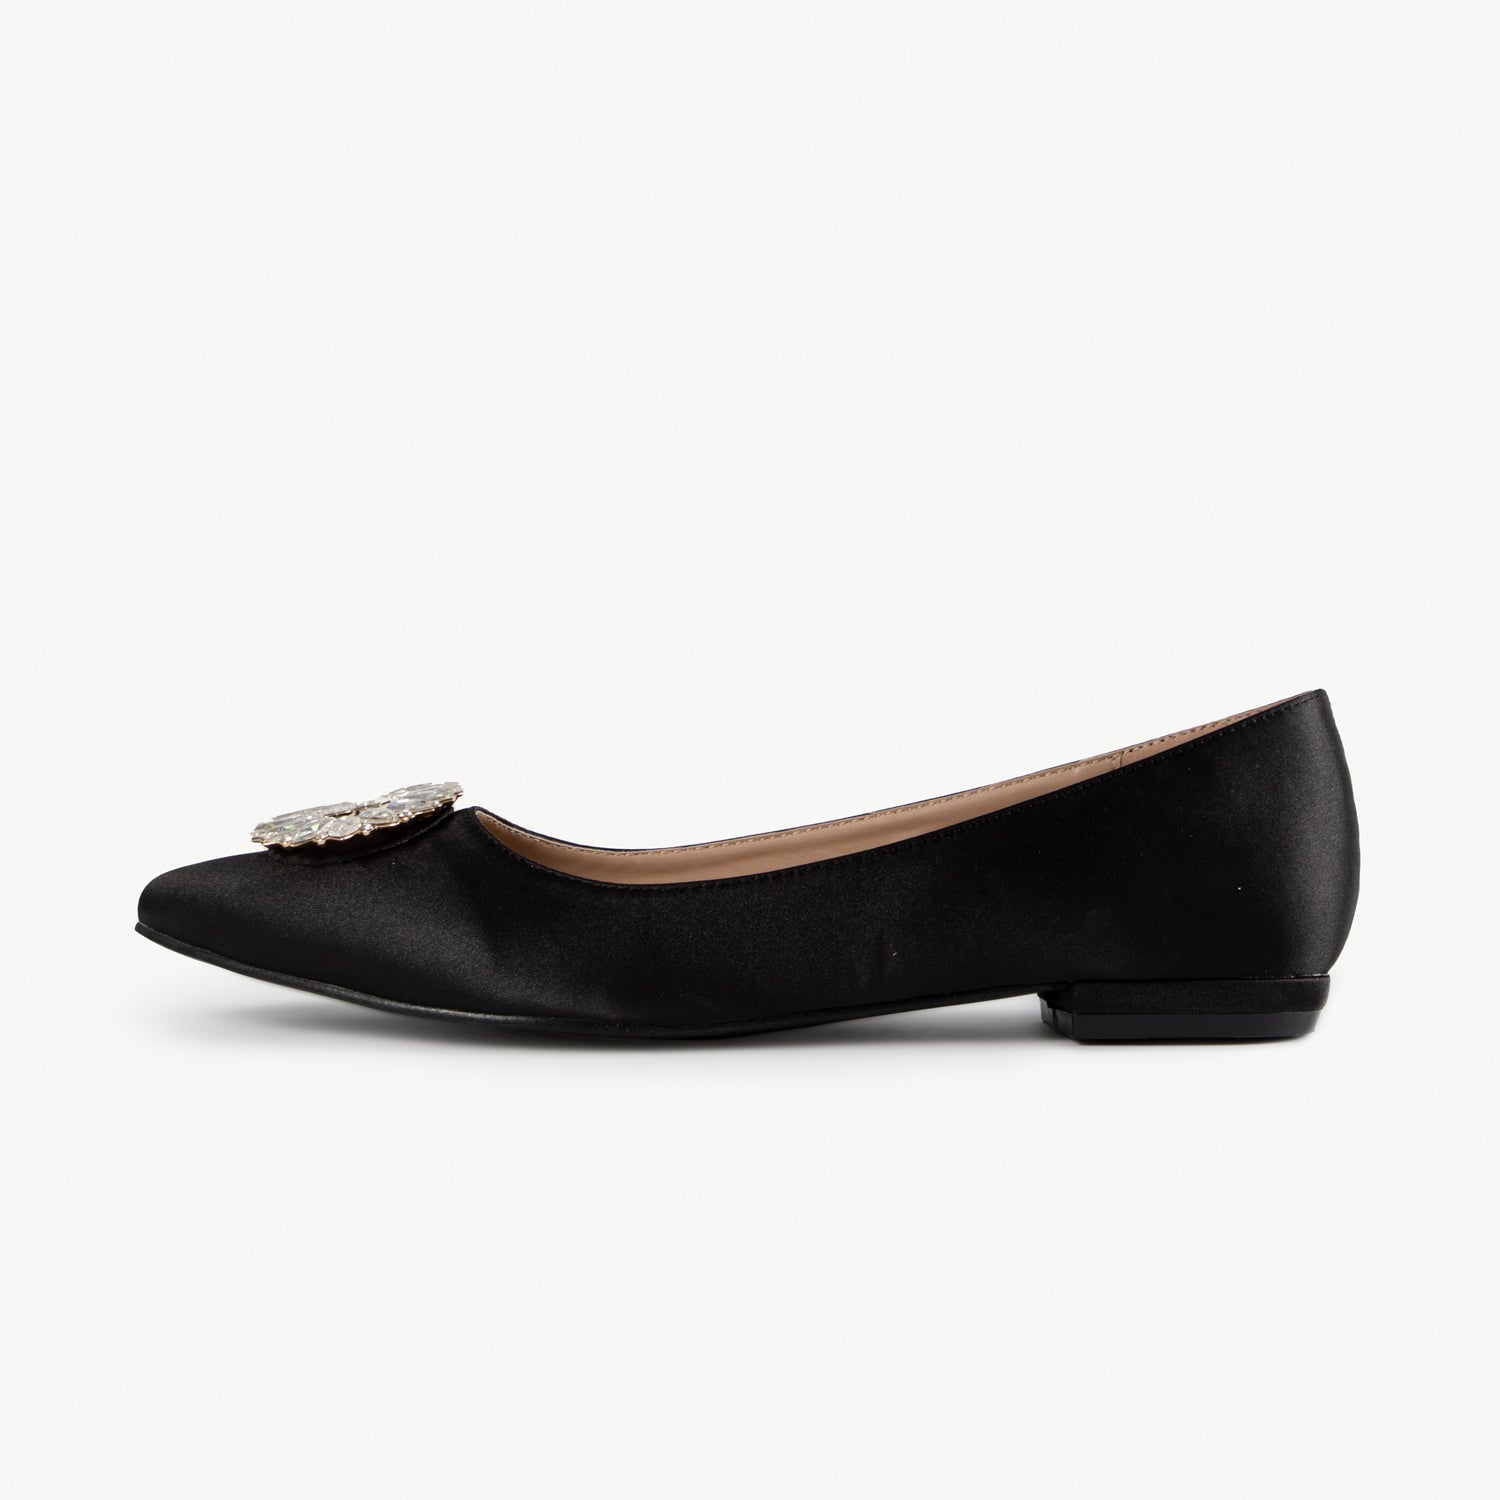 RAID Jennika Flat Shoe in Black Satin